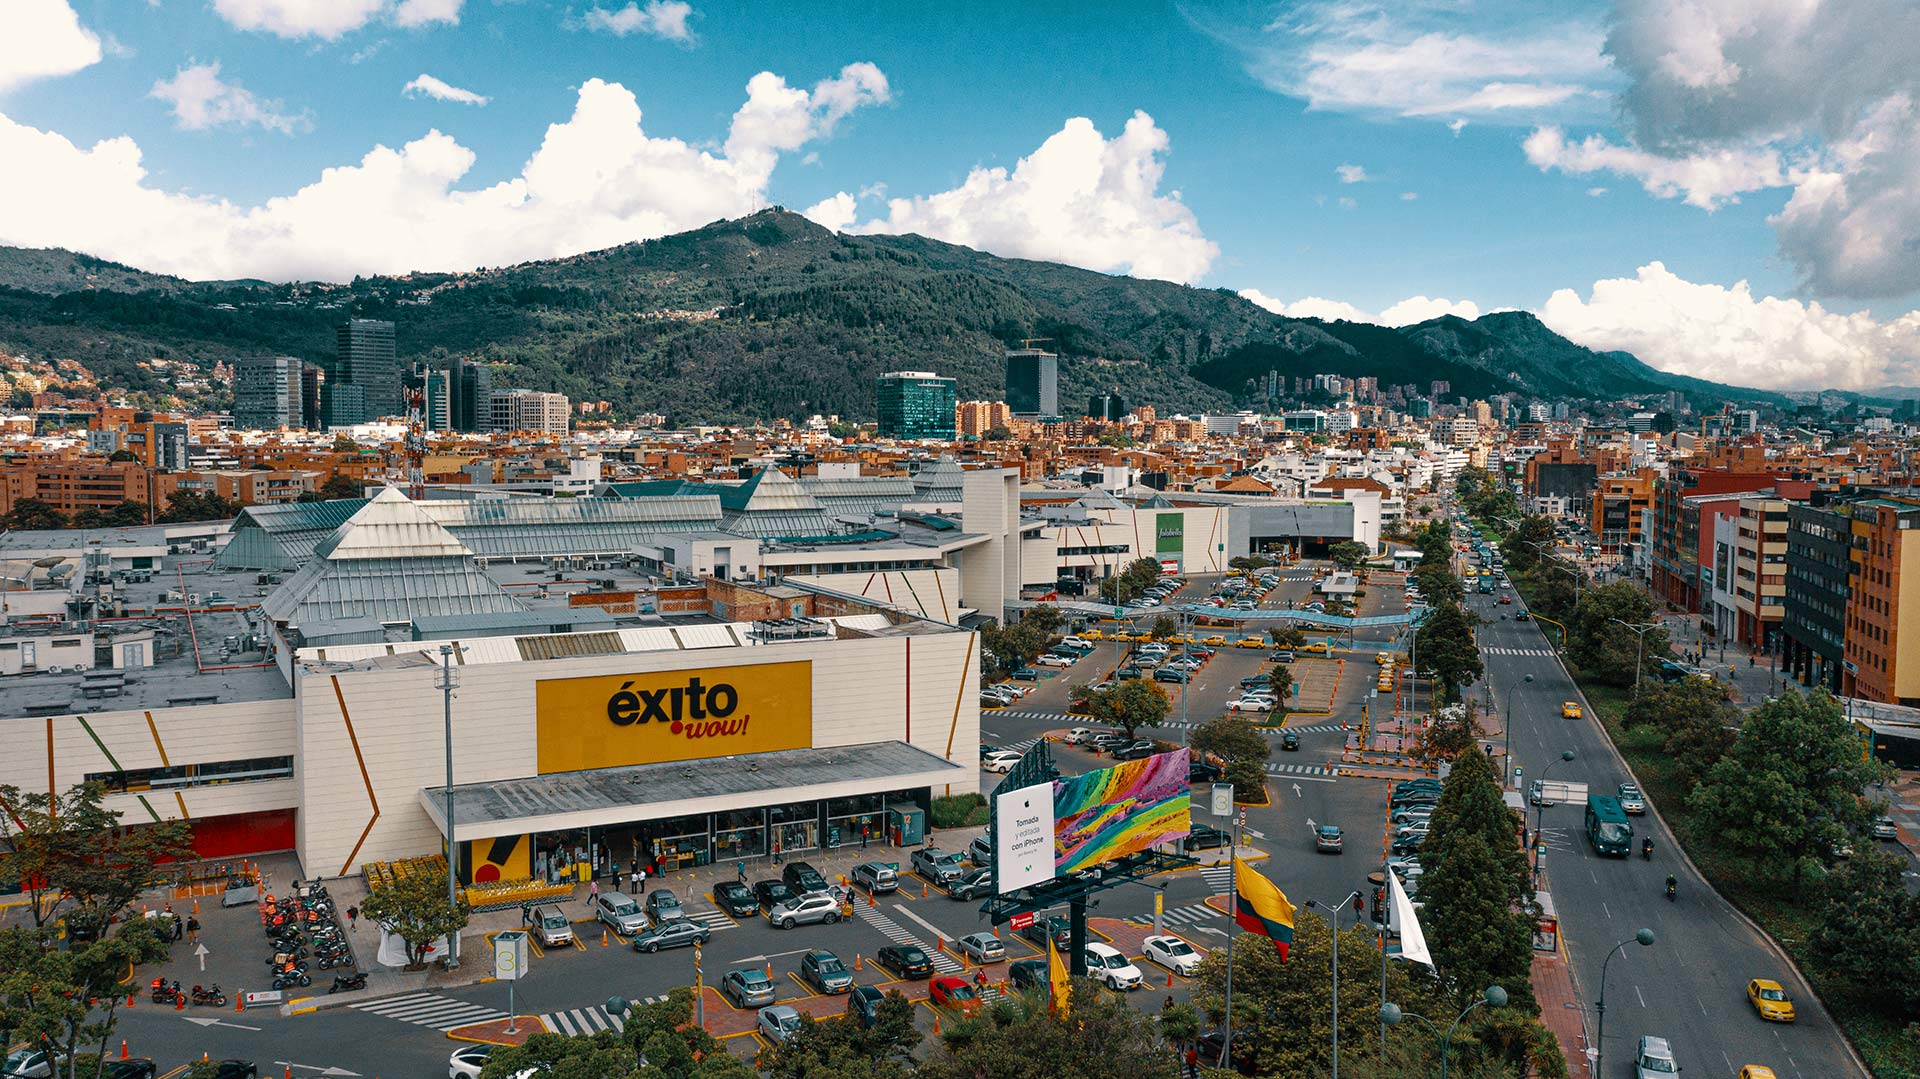 Unicentro Bogotá